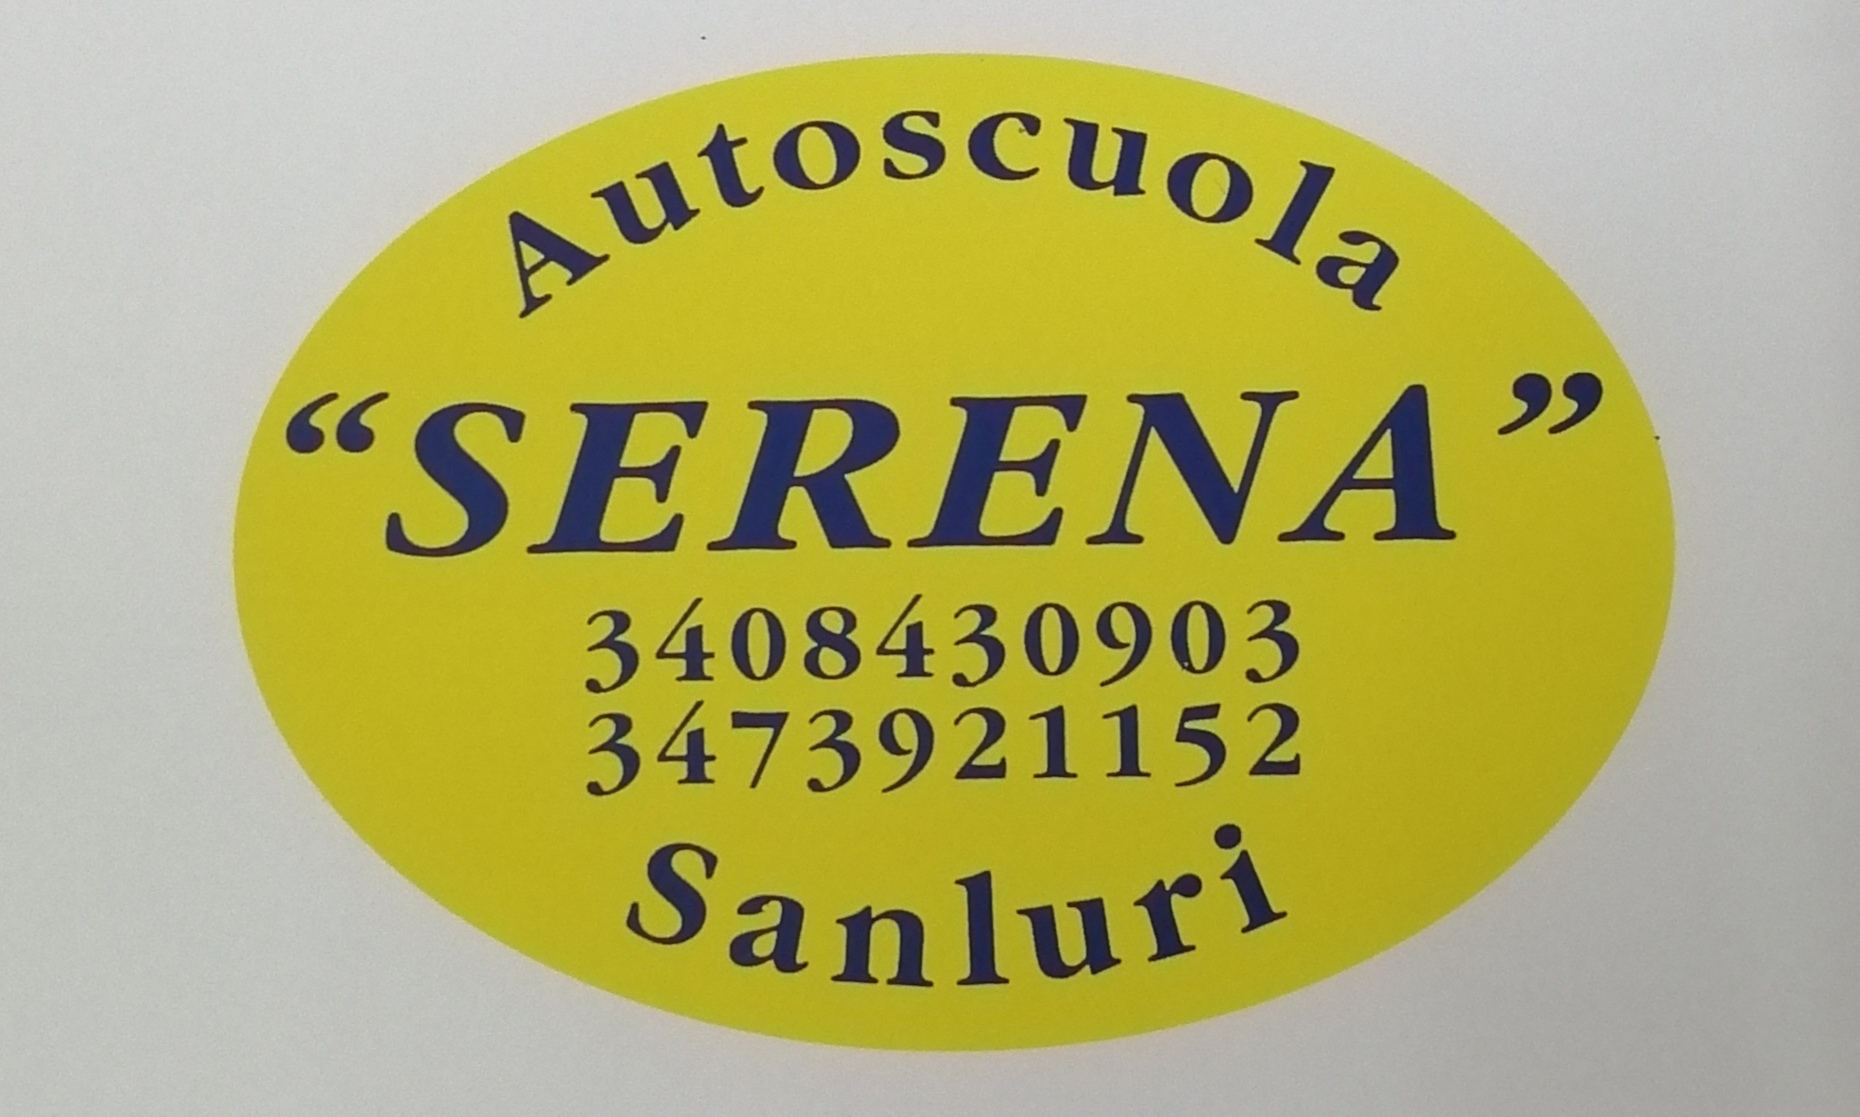 Autoscuola Serena